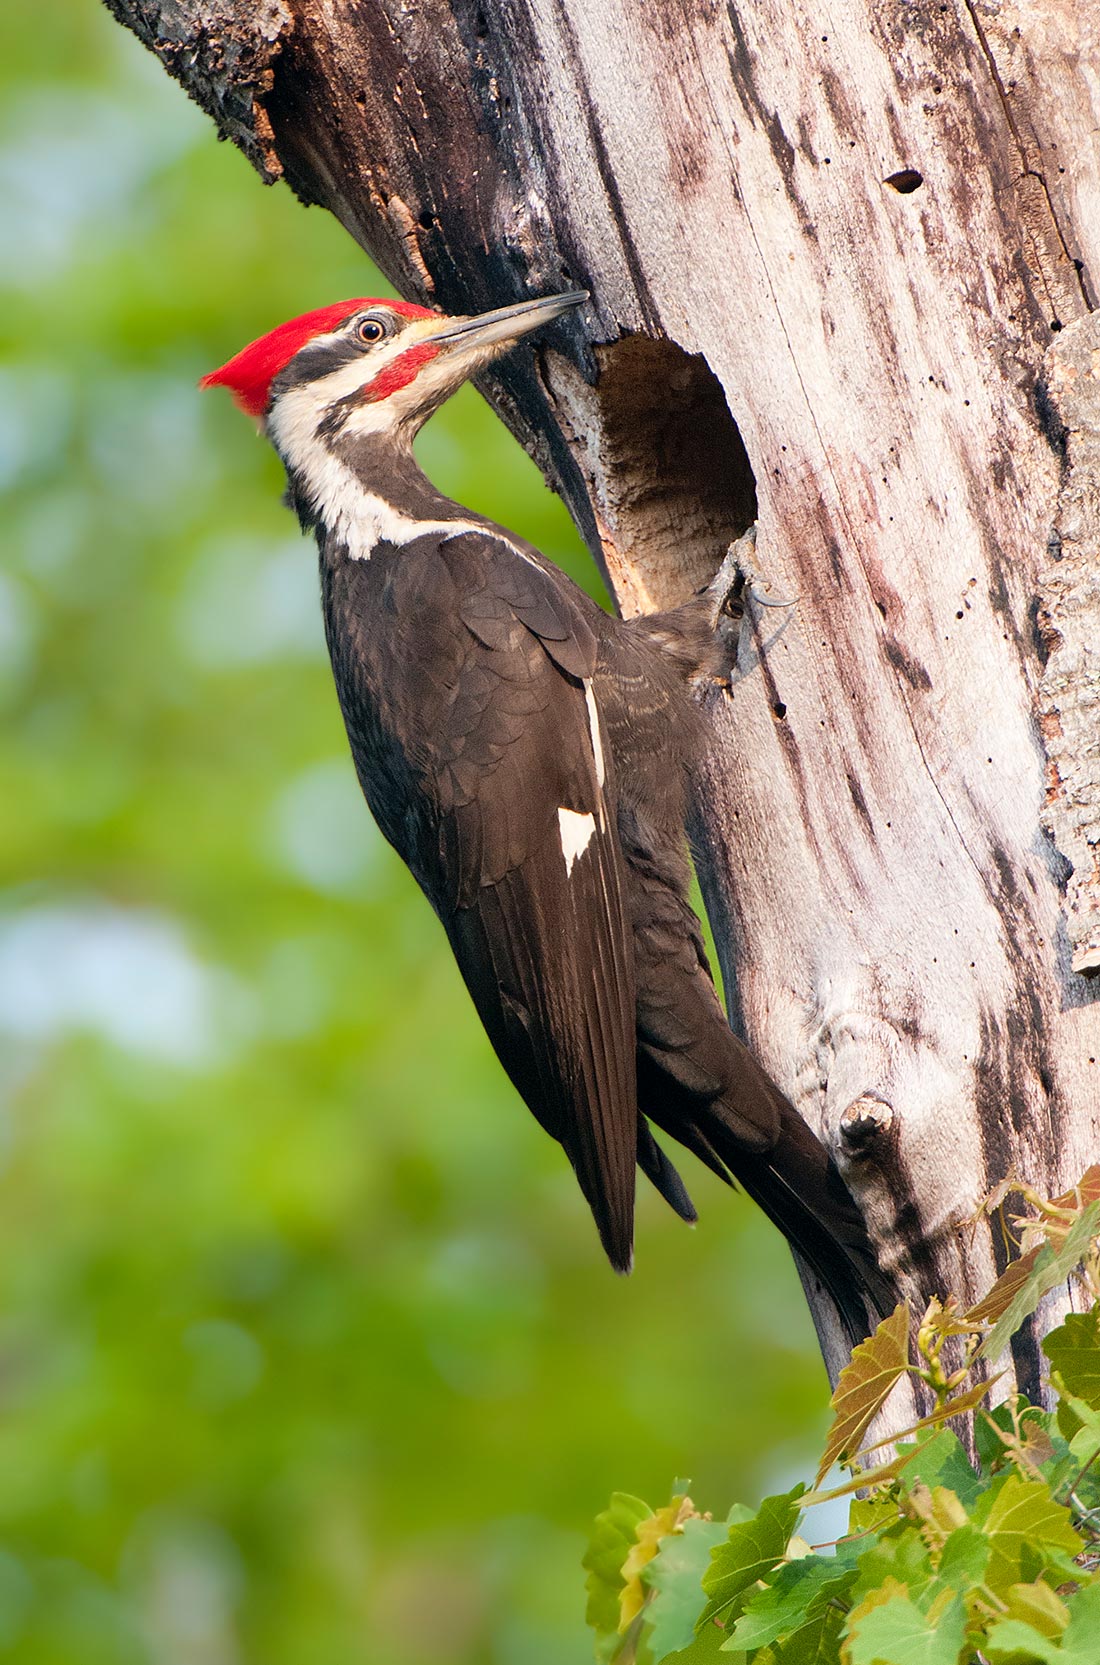 Pileated woodpecker creating a nesting cavity